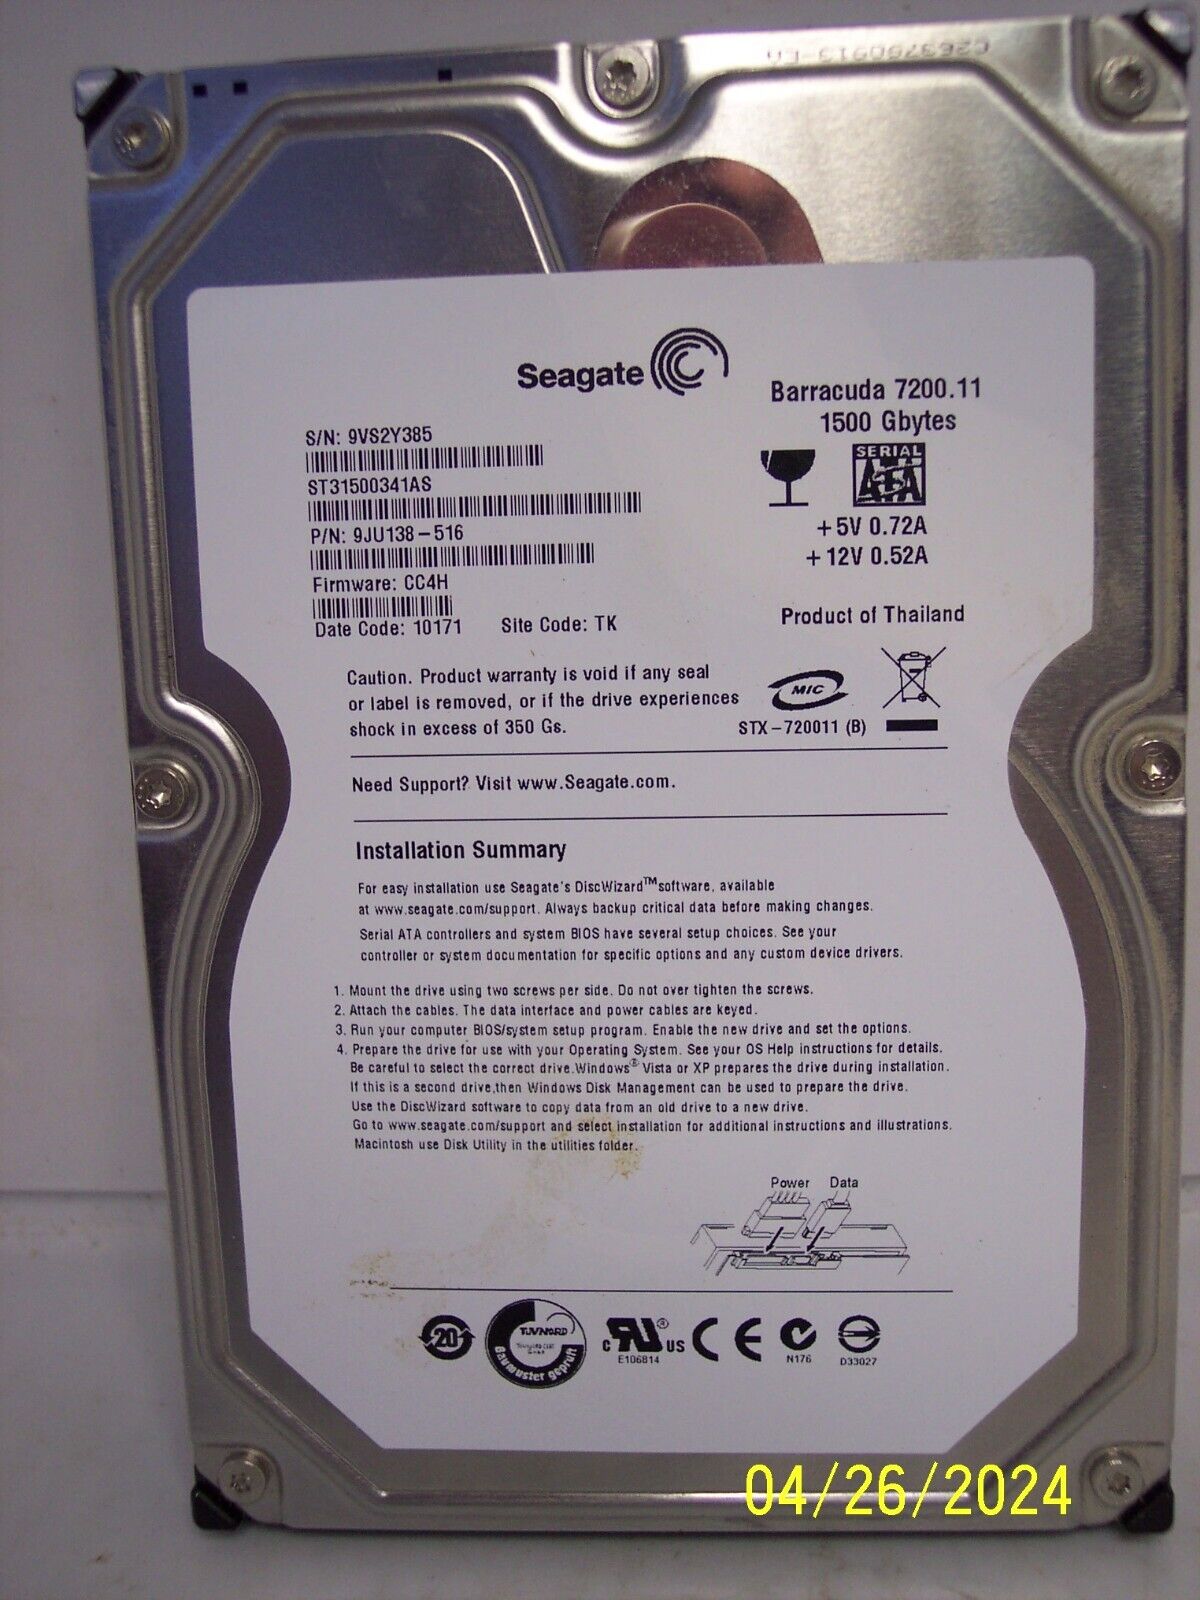 Seagate Barracuda LP 1500GB SATA Internal Desktop Hard Drive ST31500341AS